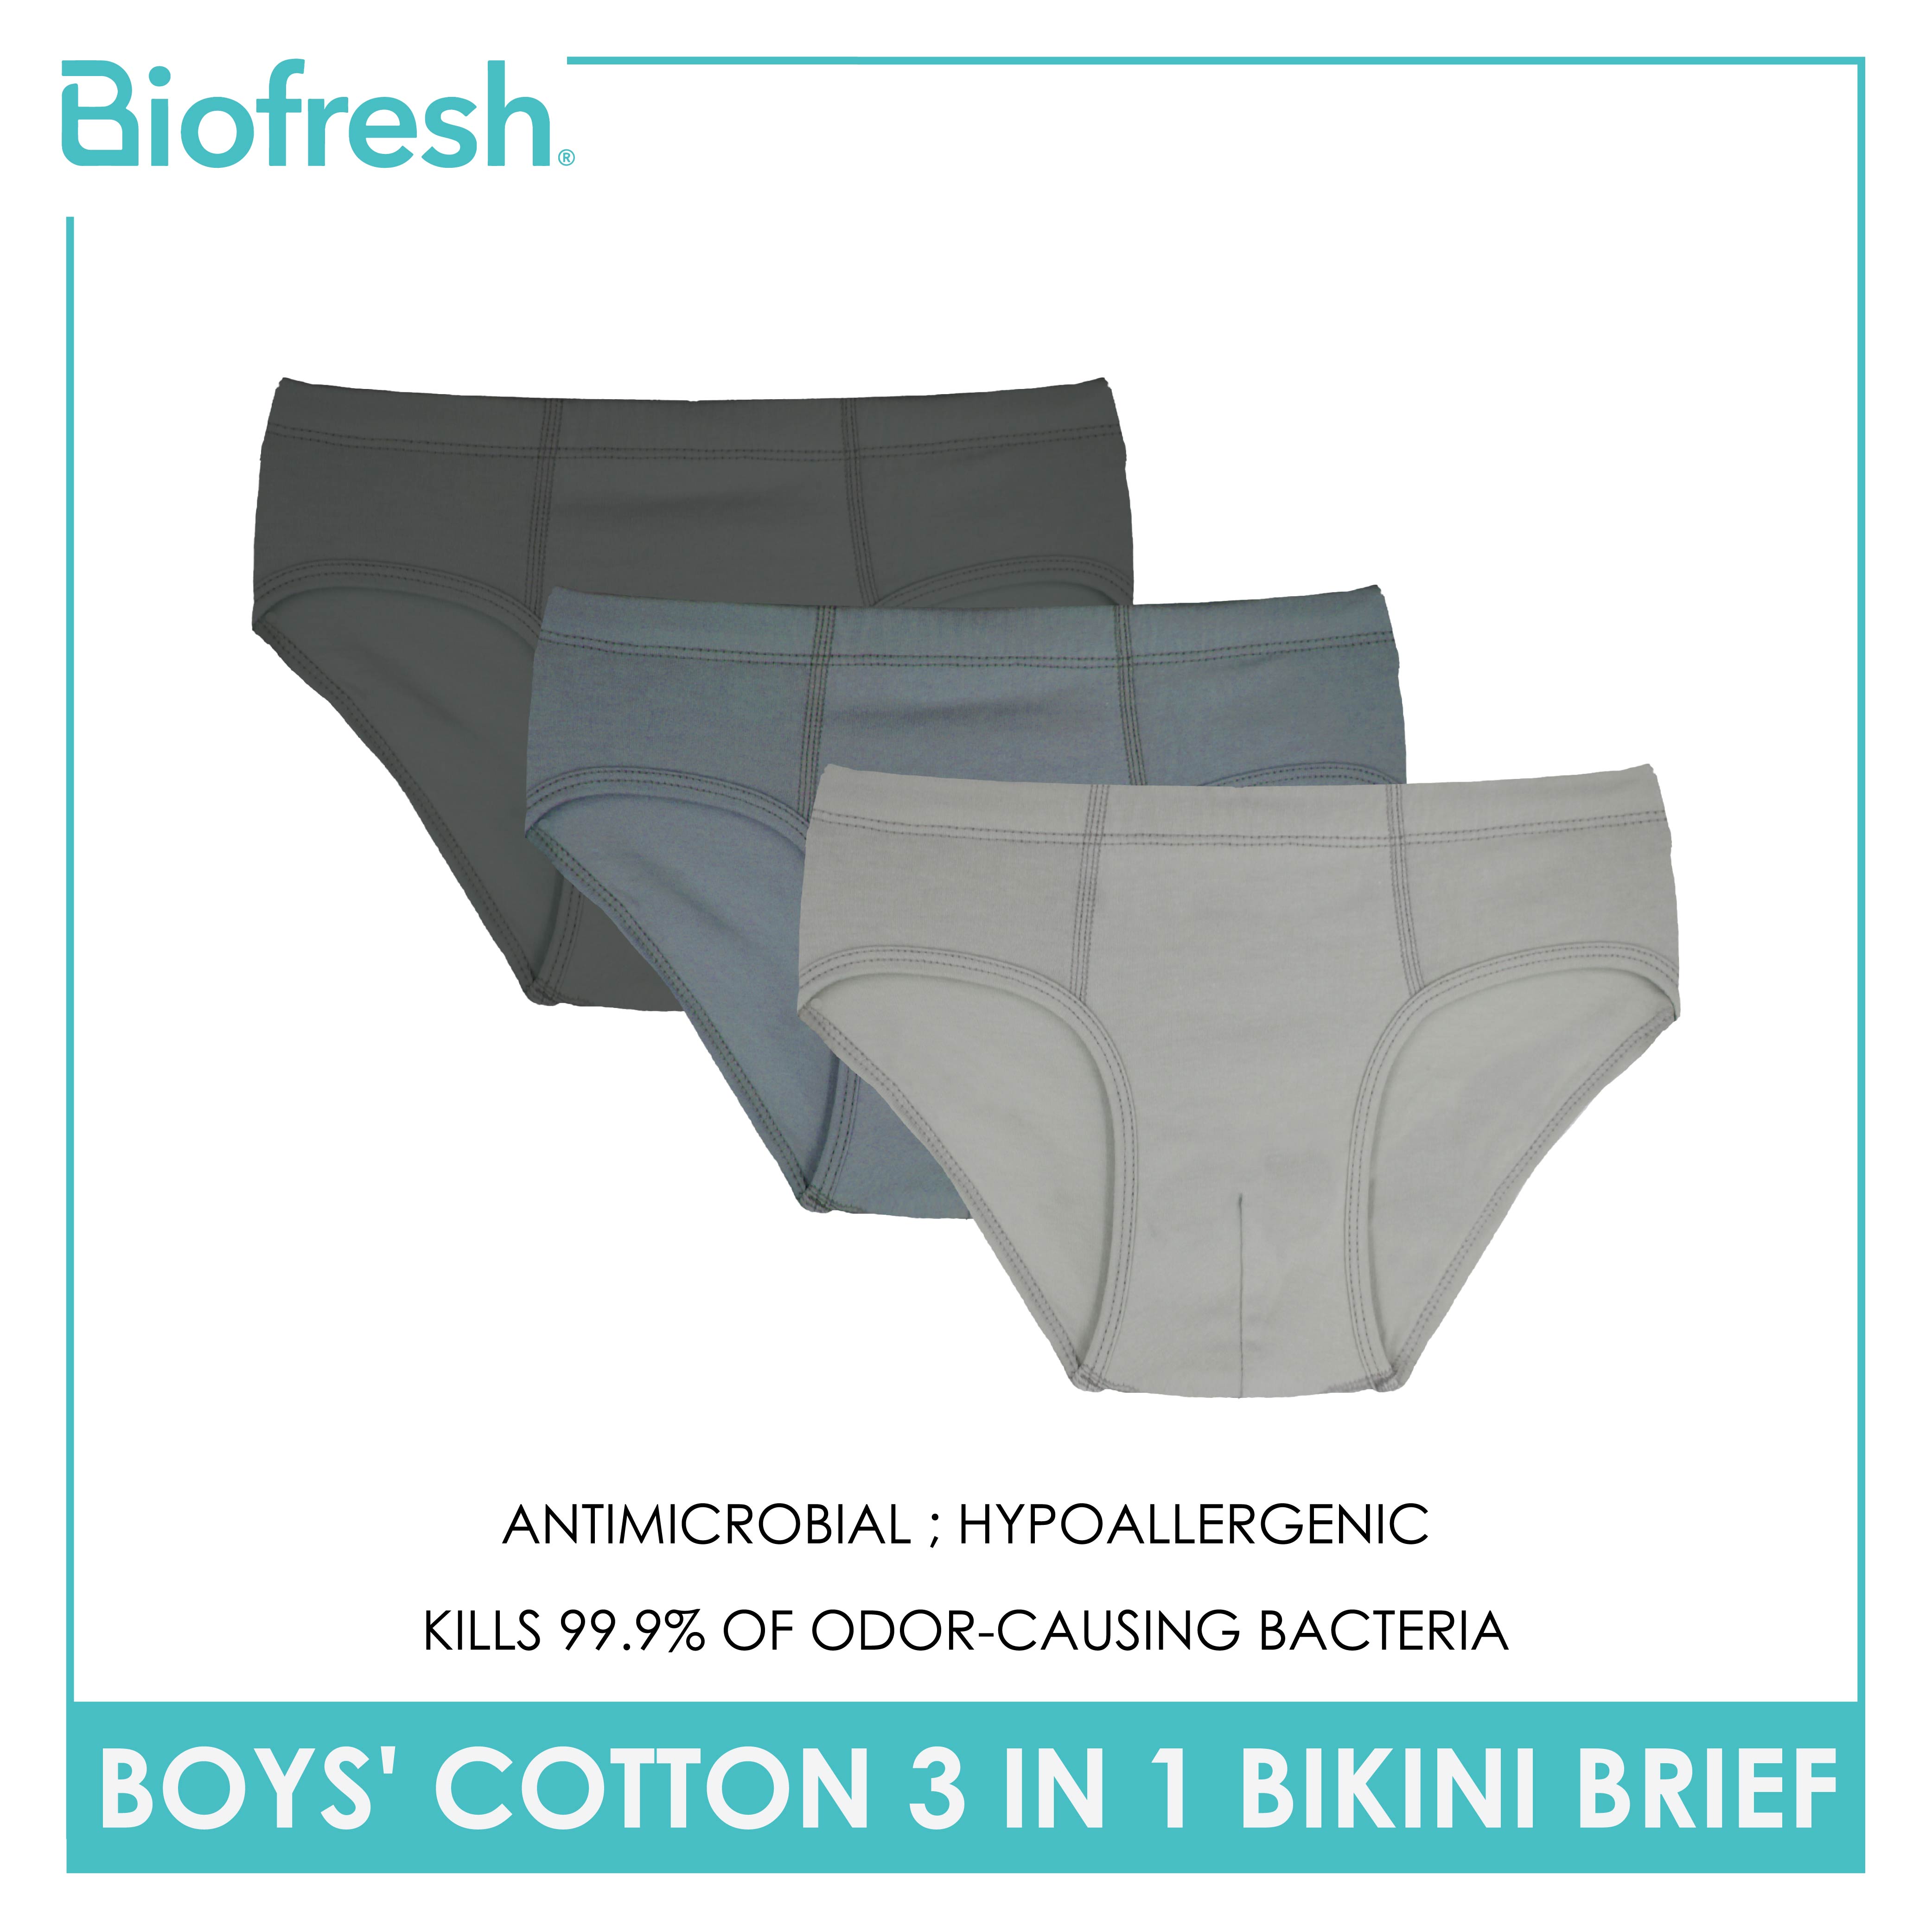 Biofresh Boys' Antimicrobial Cotton Bikini Brief 3 pieces in a pack UCBCG20